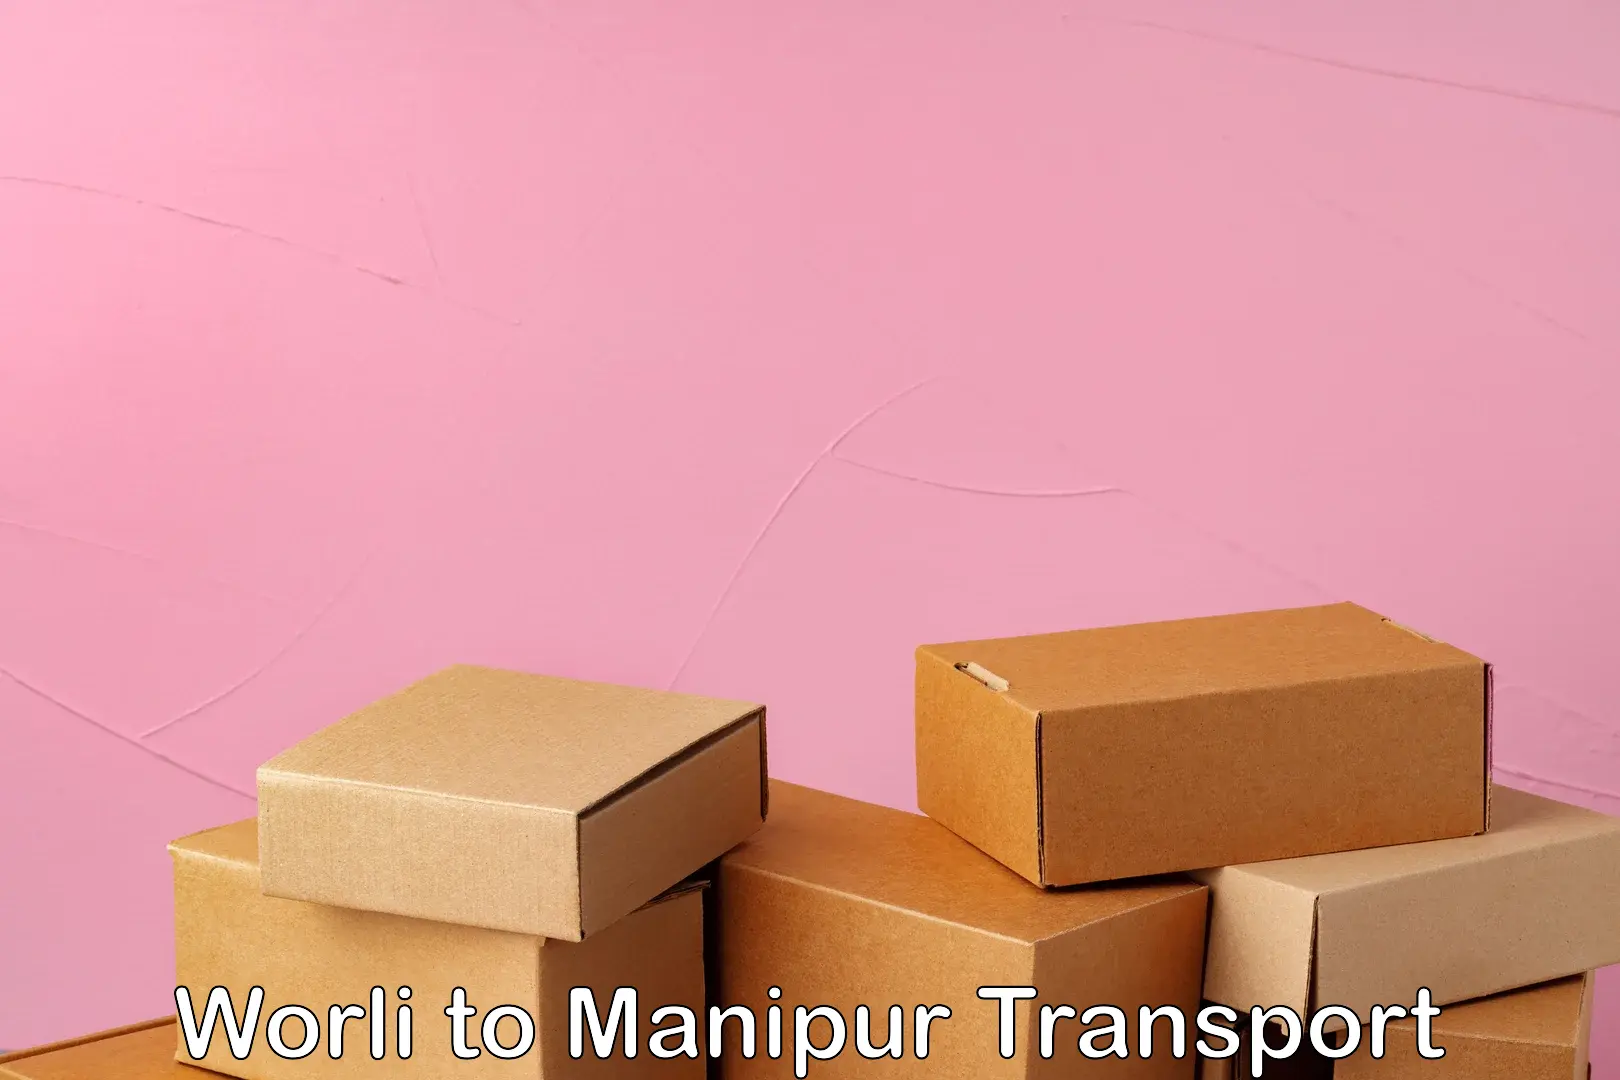 Daily transport service Worli to Manipur